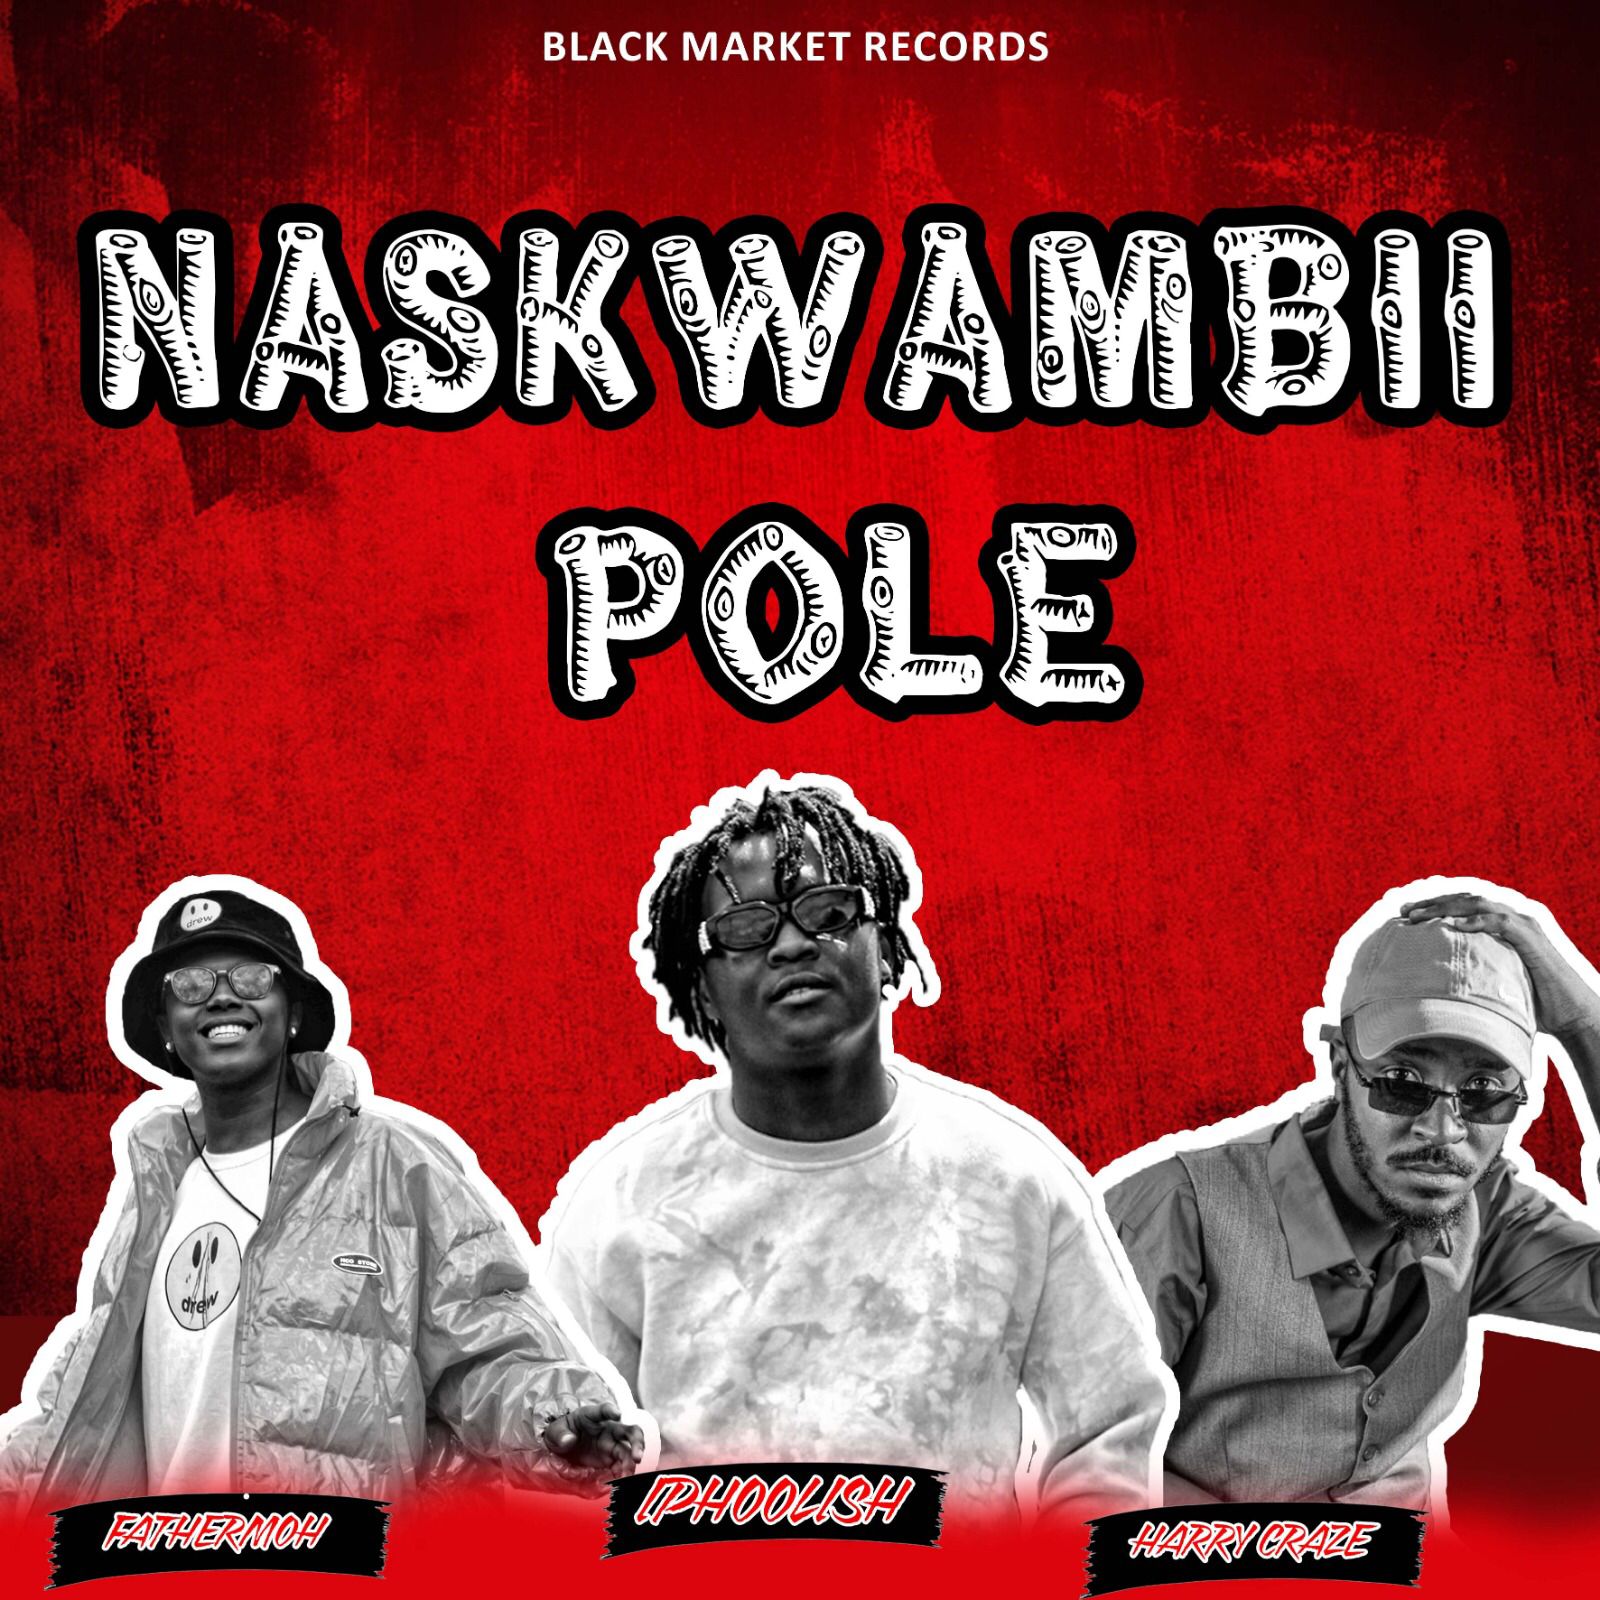 Iphoolish ajiandaa kutoa wombo mpya uitwao “Nakwambia Pole”